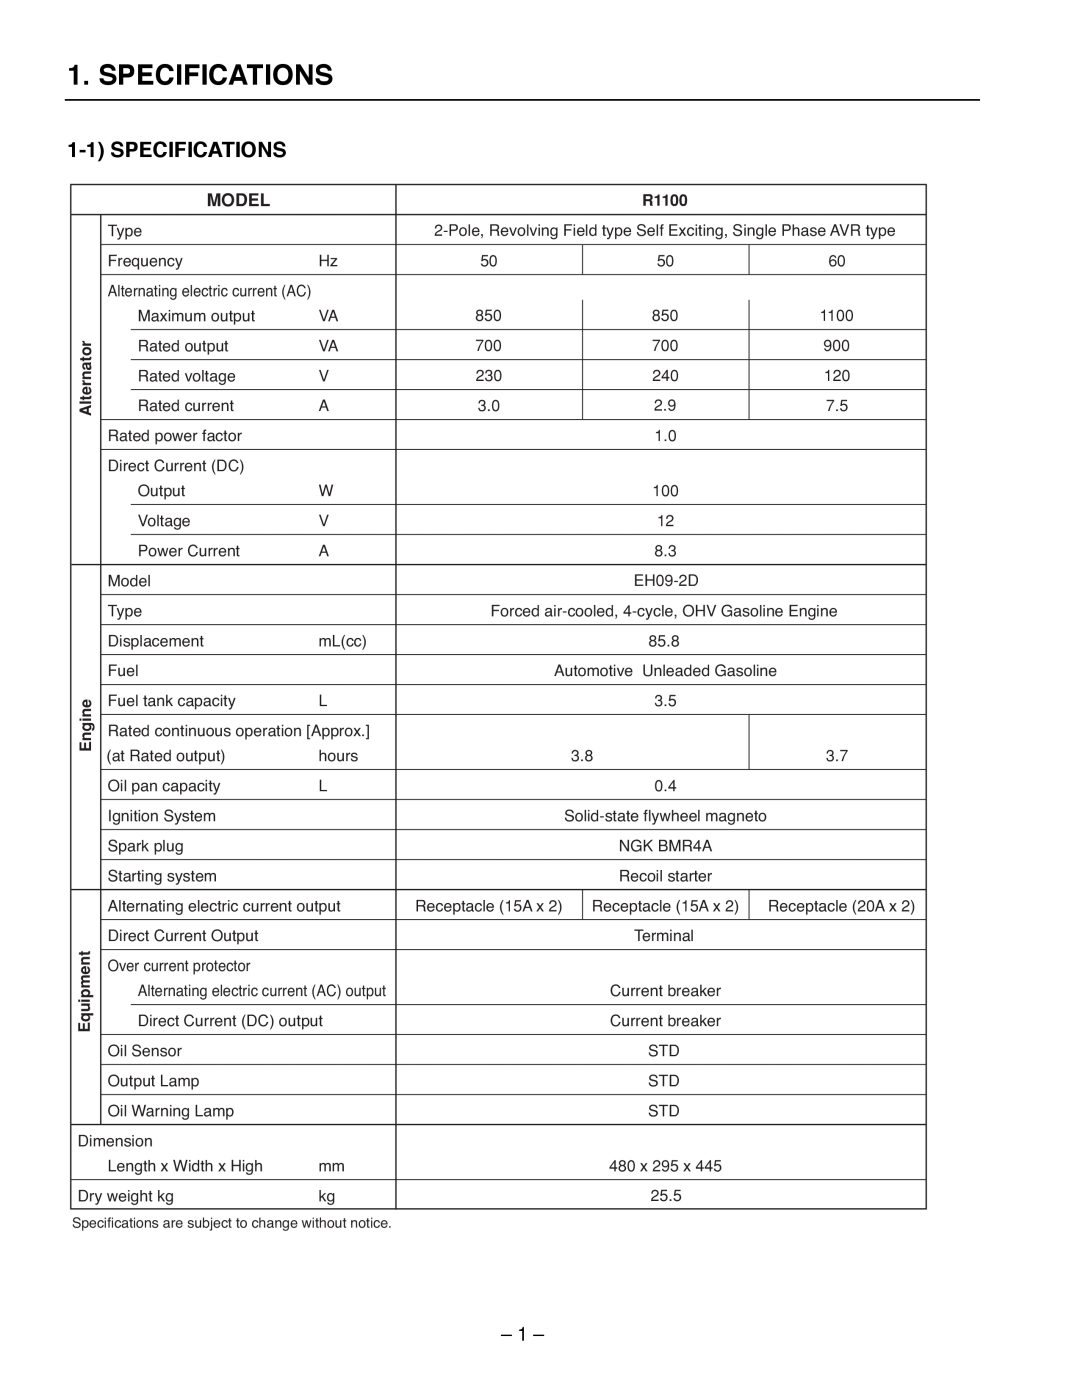 Subaru R1100 service manual Specifications, Model, Engine 